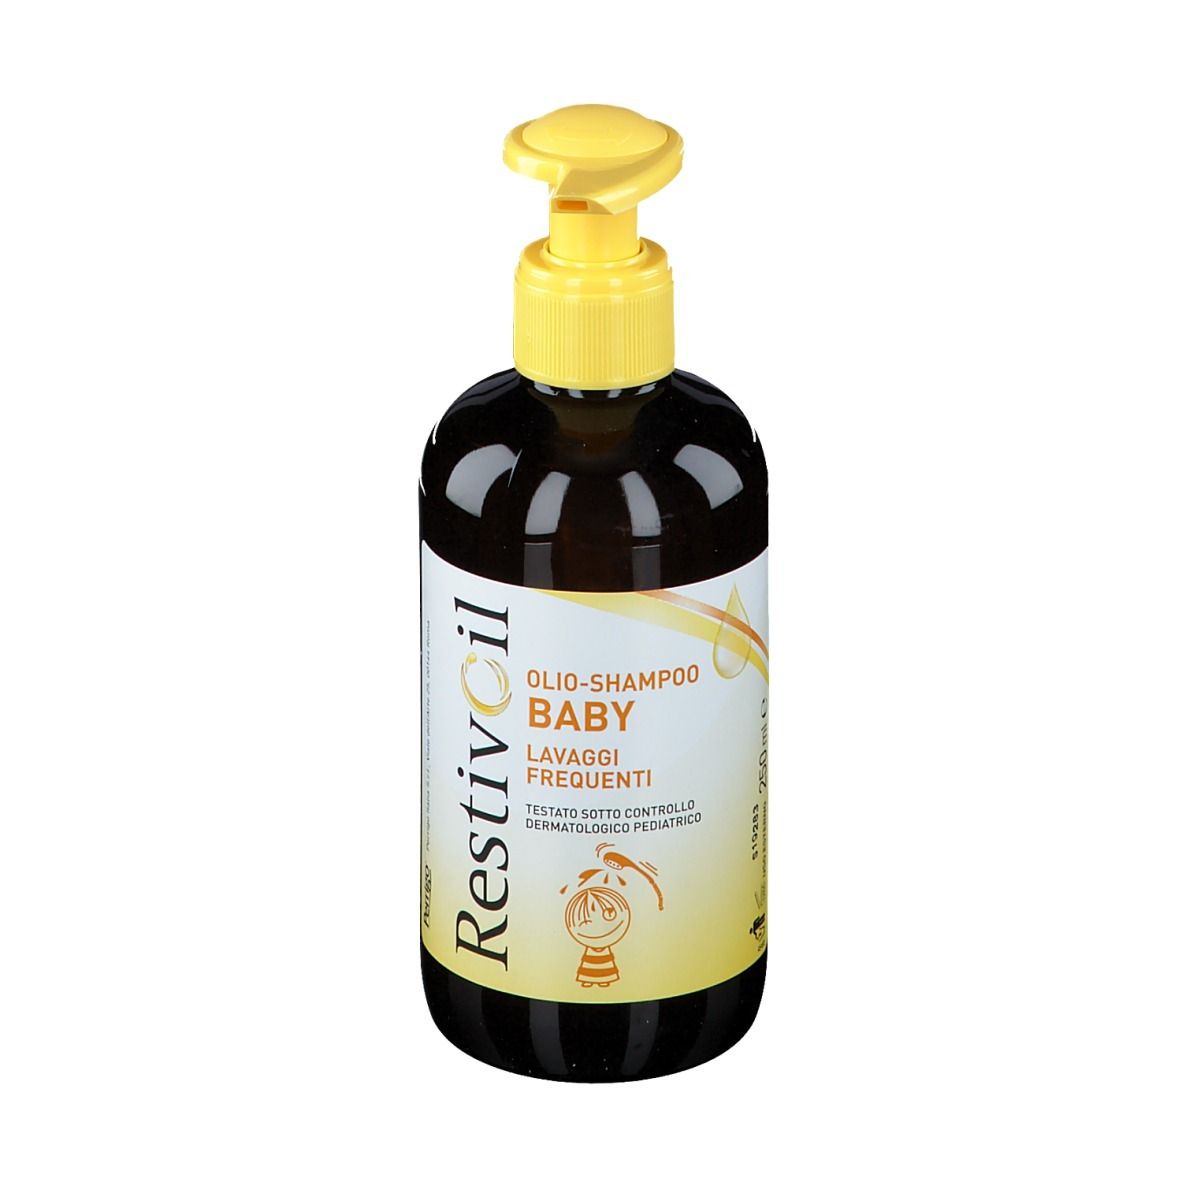 PERRIGO ITALIA Srl Restivoiles Baby-Olio-Shampoo